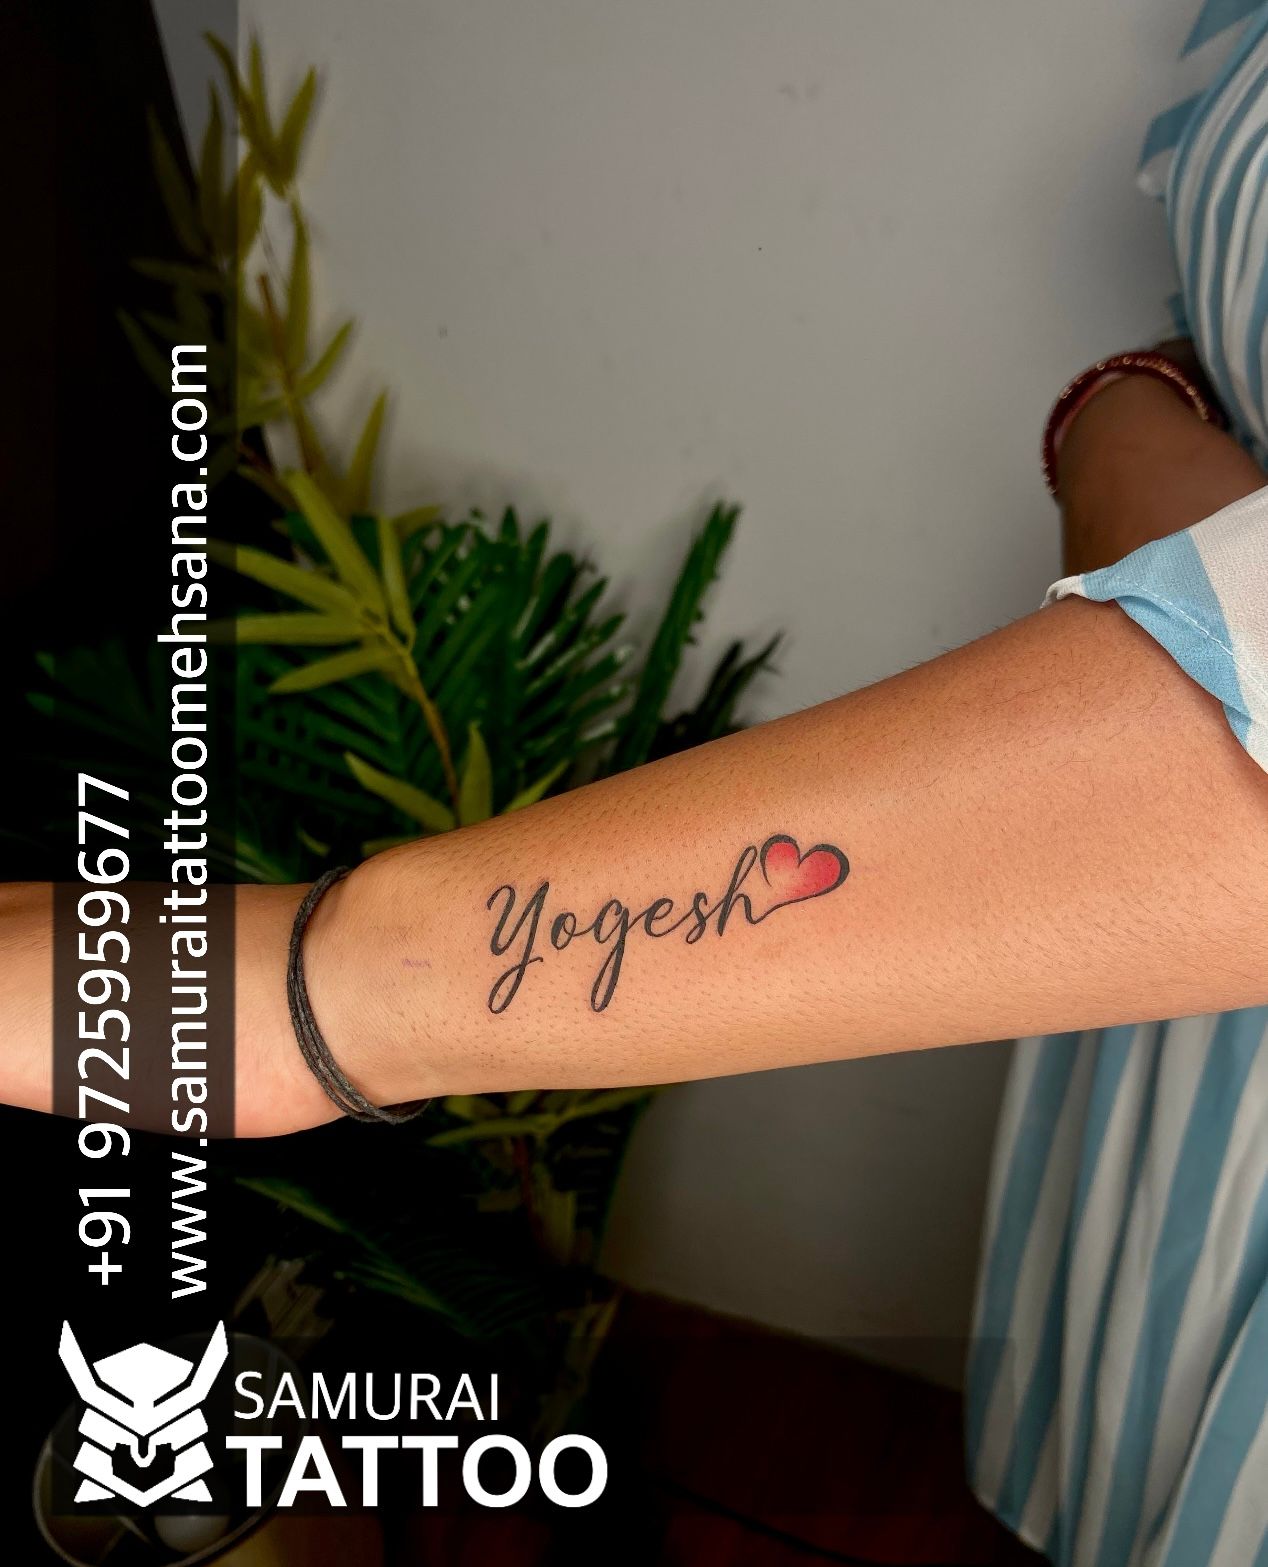 Tattoo uploaded by Vipul Chaudhary • Yogesh name tattoo |Yogesh name tattoo  ideas |Yogesh tattoo design |Yogesh name tattoo design • Tattoodo